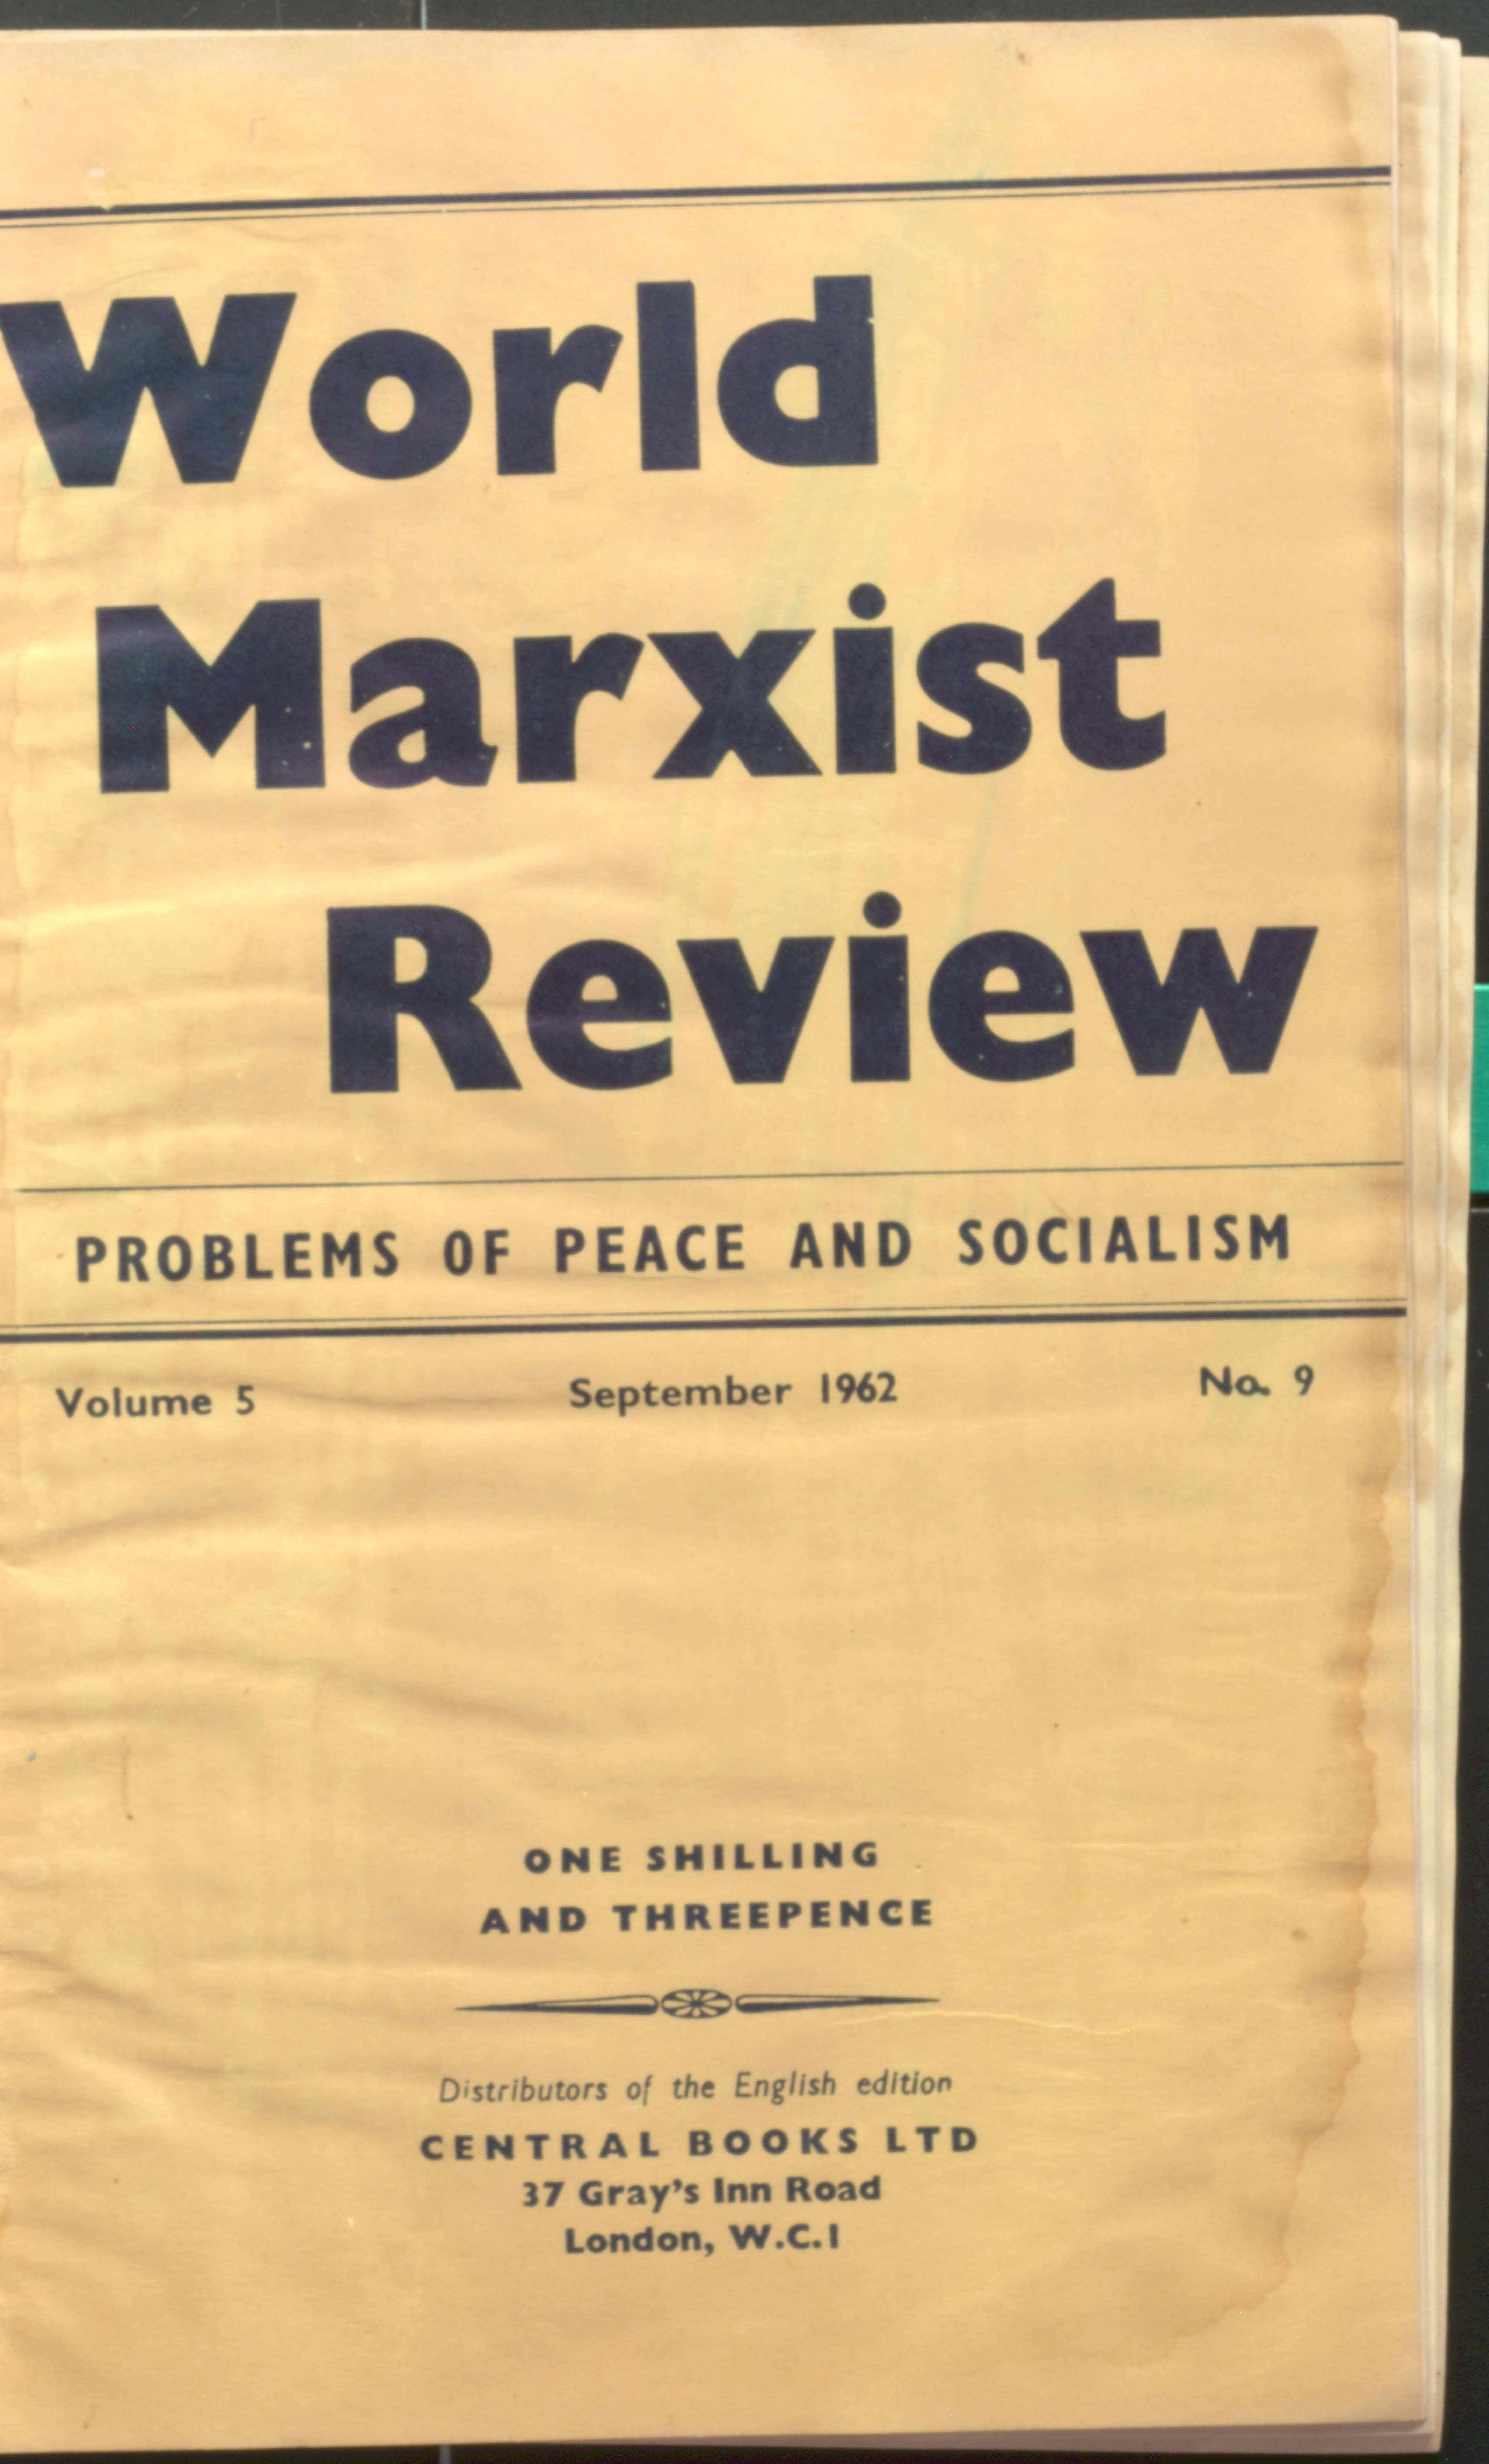 World marxist review (volume-5 september 1962)